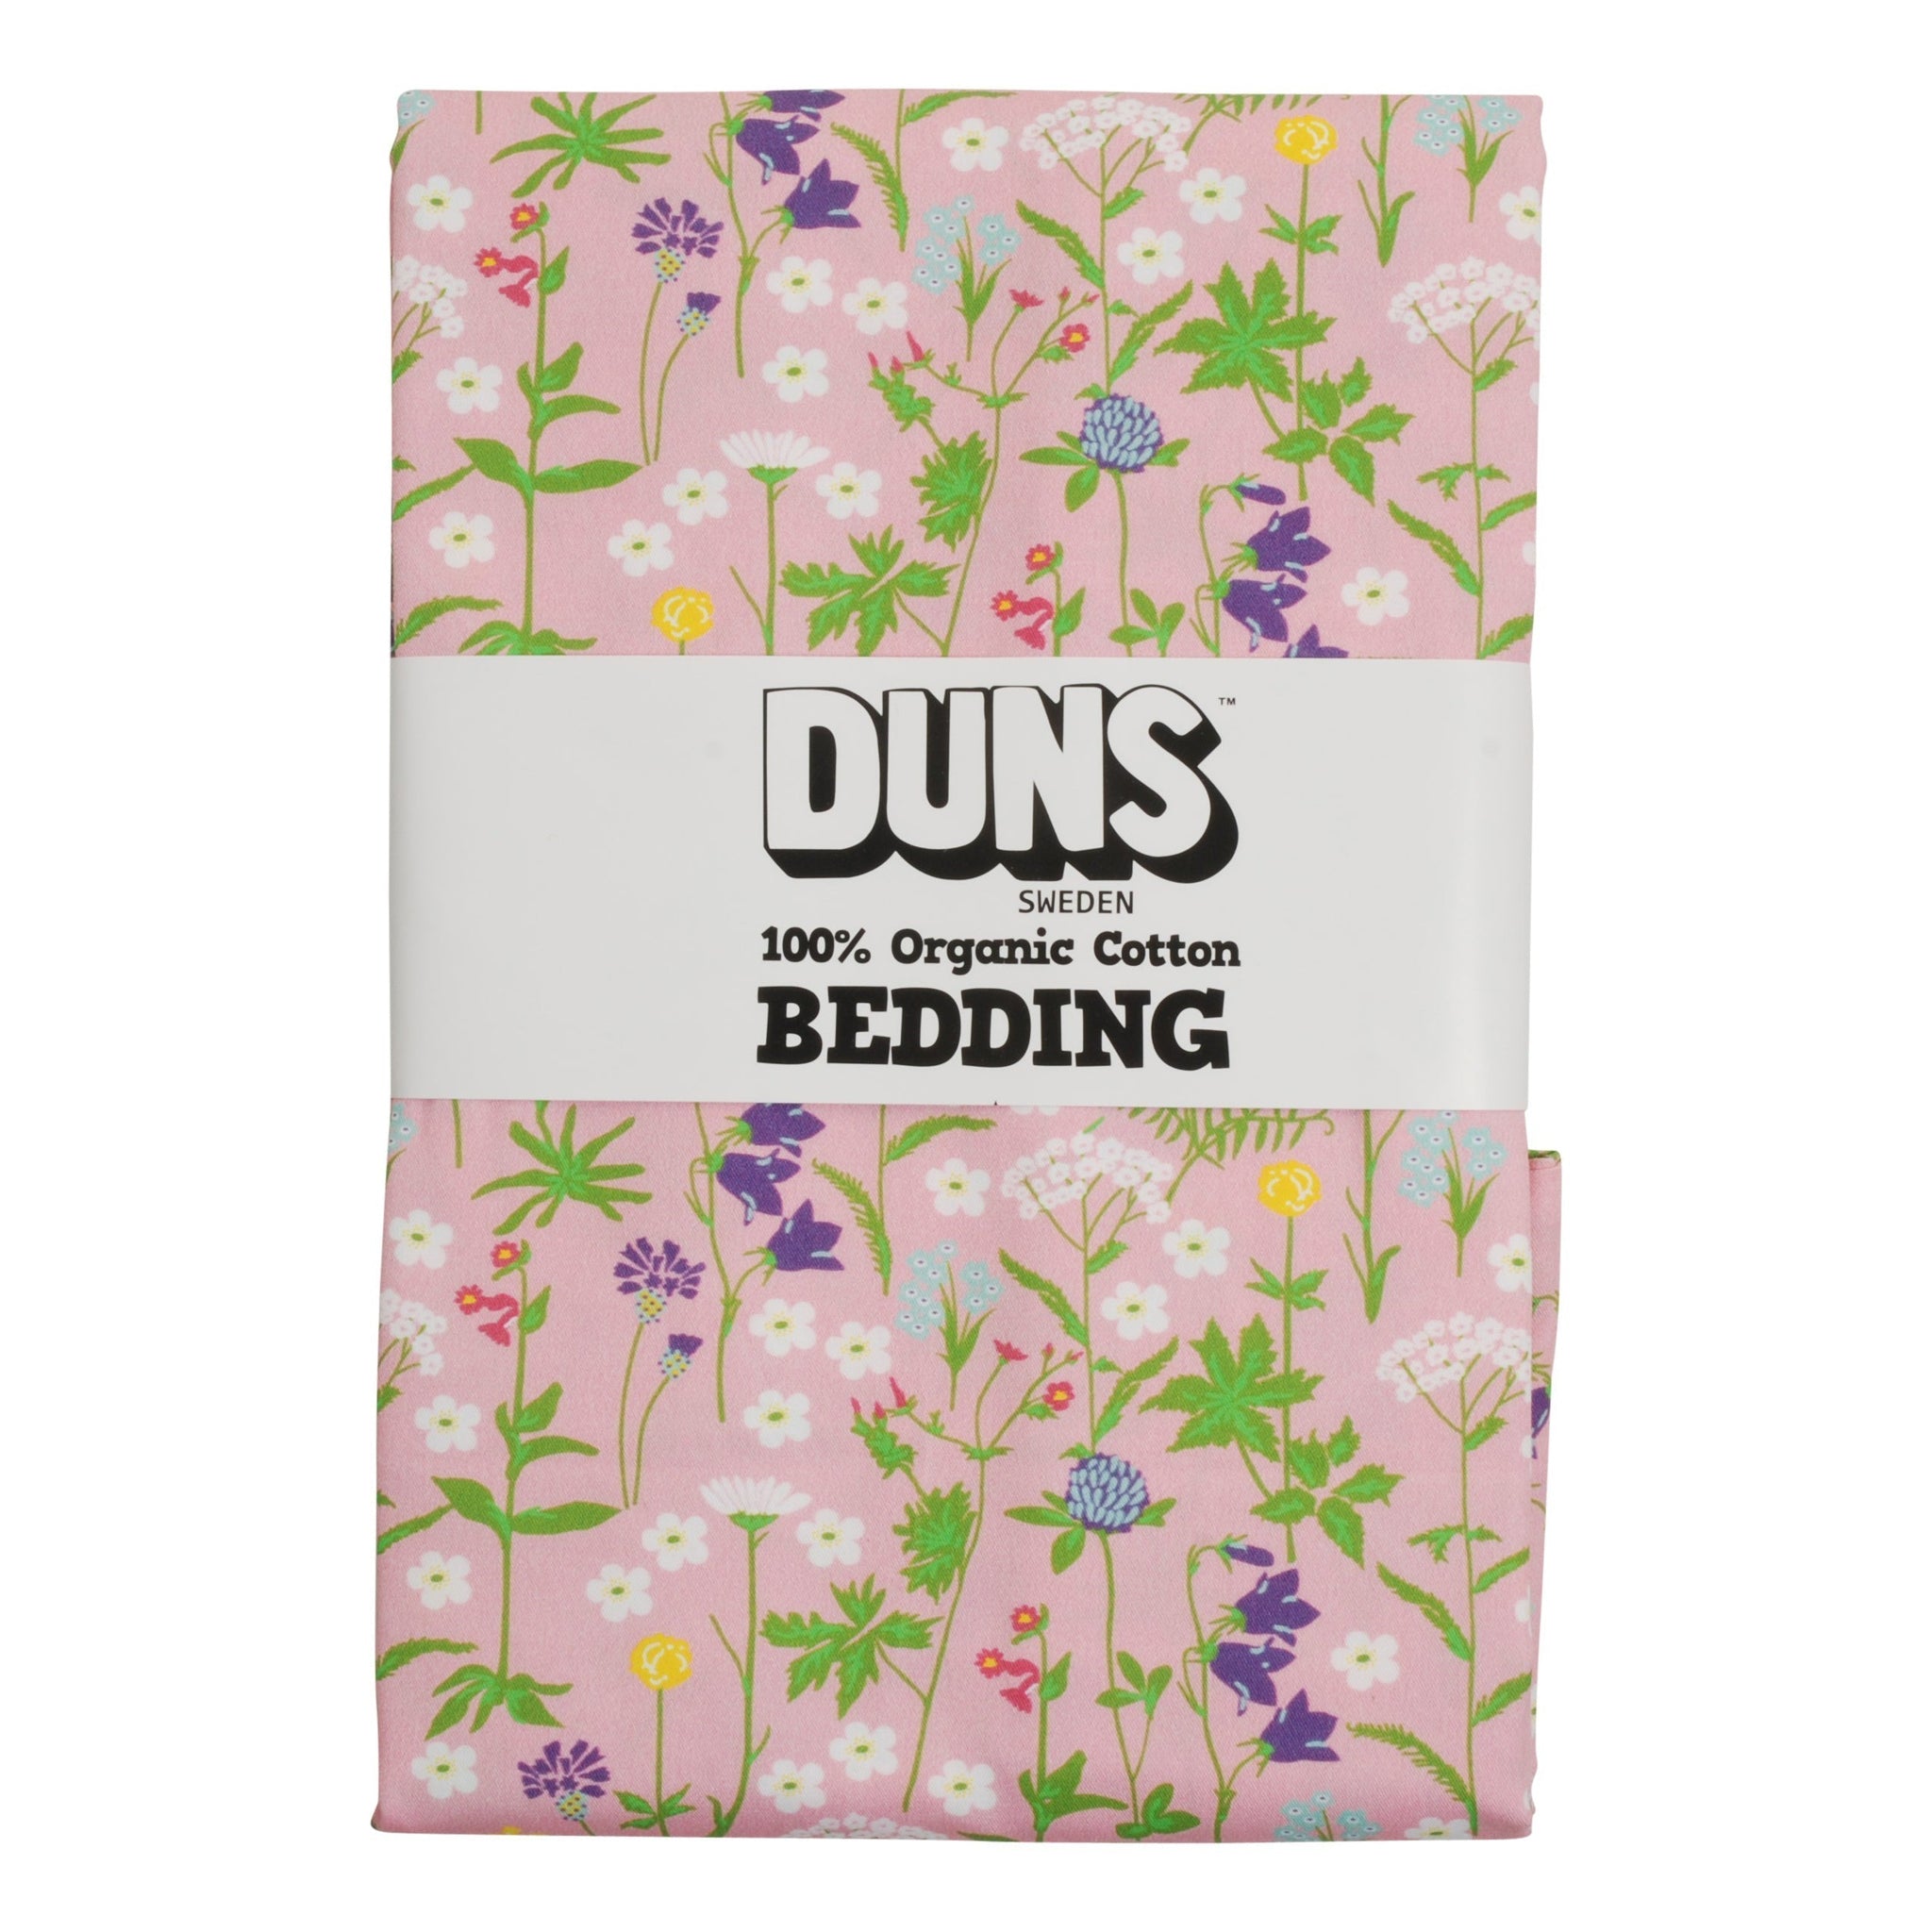 DUNS Sweden - Wild Flowers Bedding (Pink)